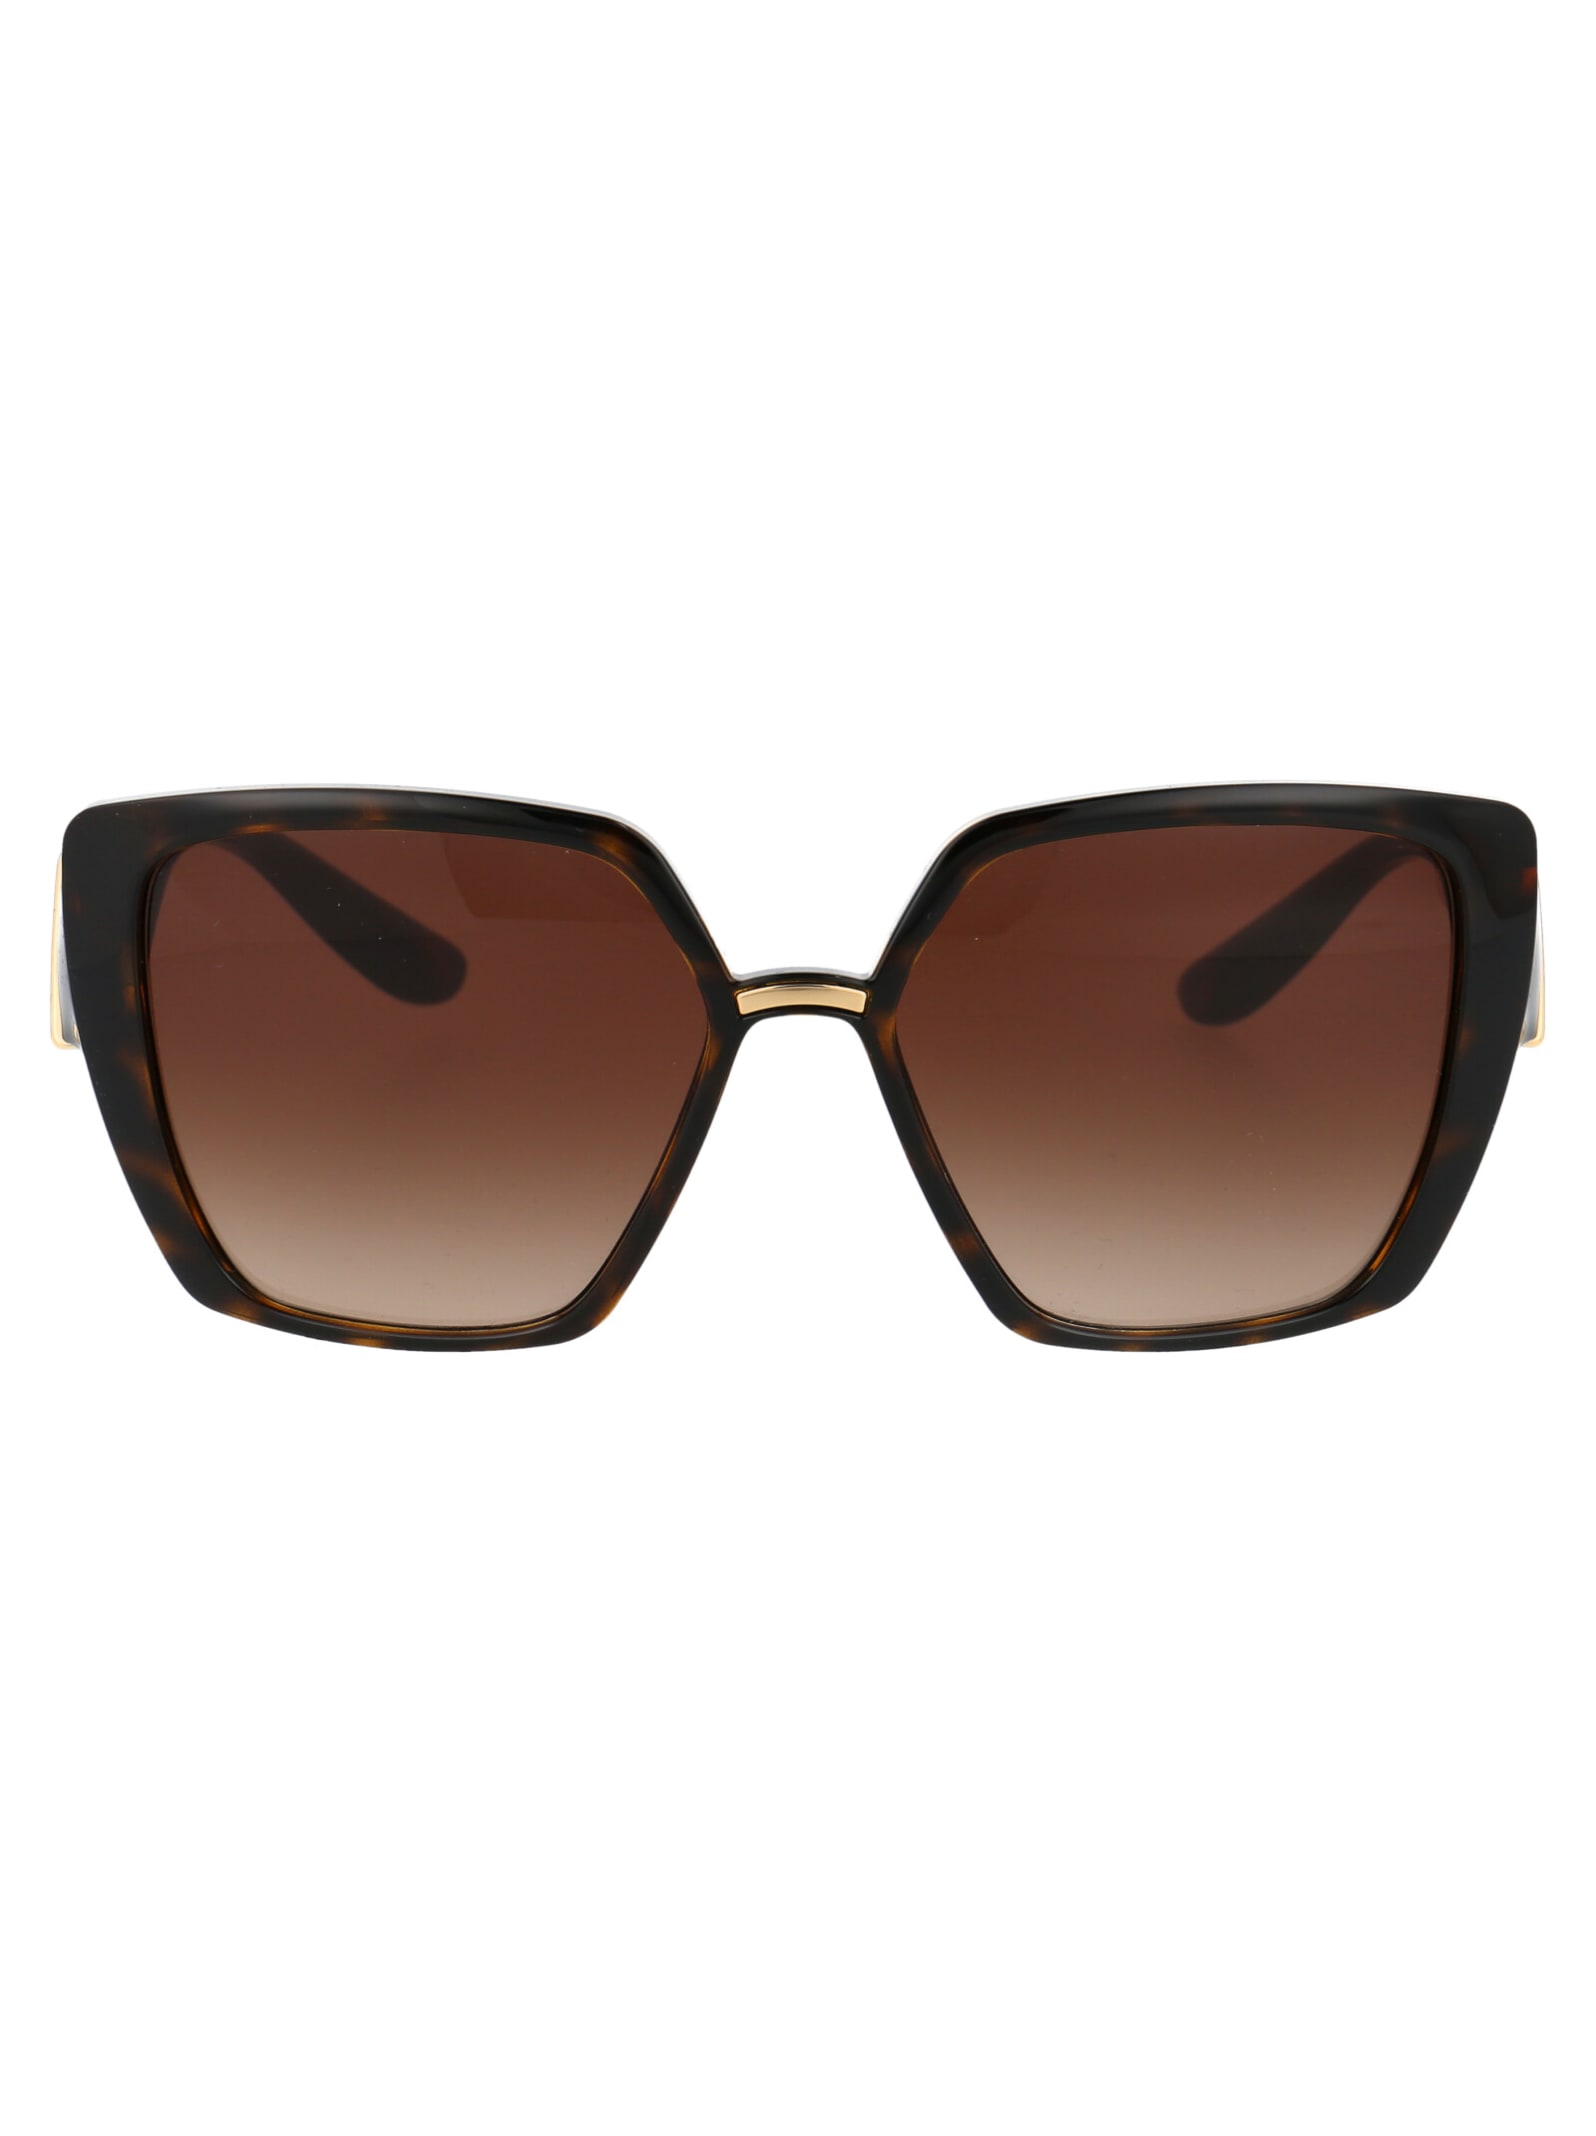 Dolce & Gabbana Eyewear 0dg6156 Sunglasses